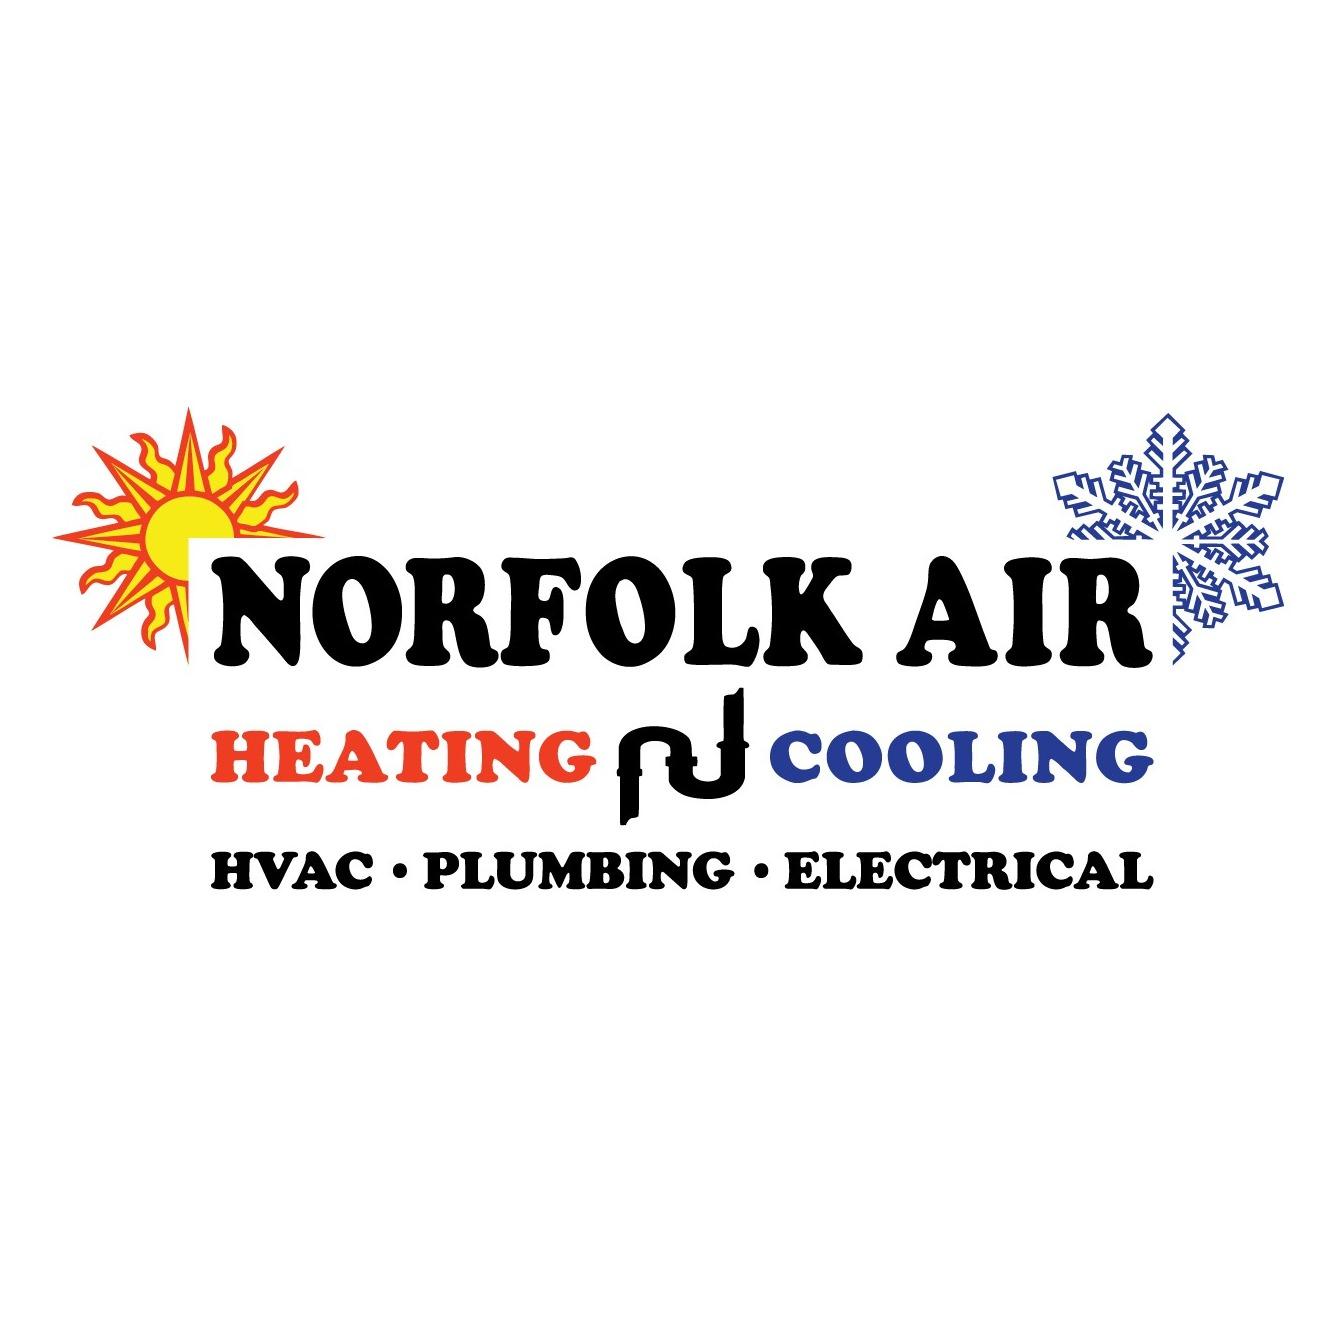 Norfolk Air Heating, Cooling, Plumbing & Electrical - Norfolk, VA 23518 - (757)241-8660 | ShowMeLocal.com